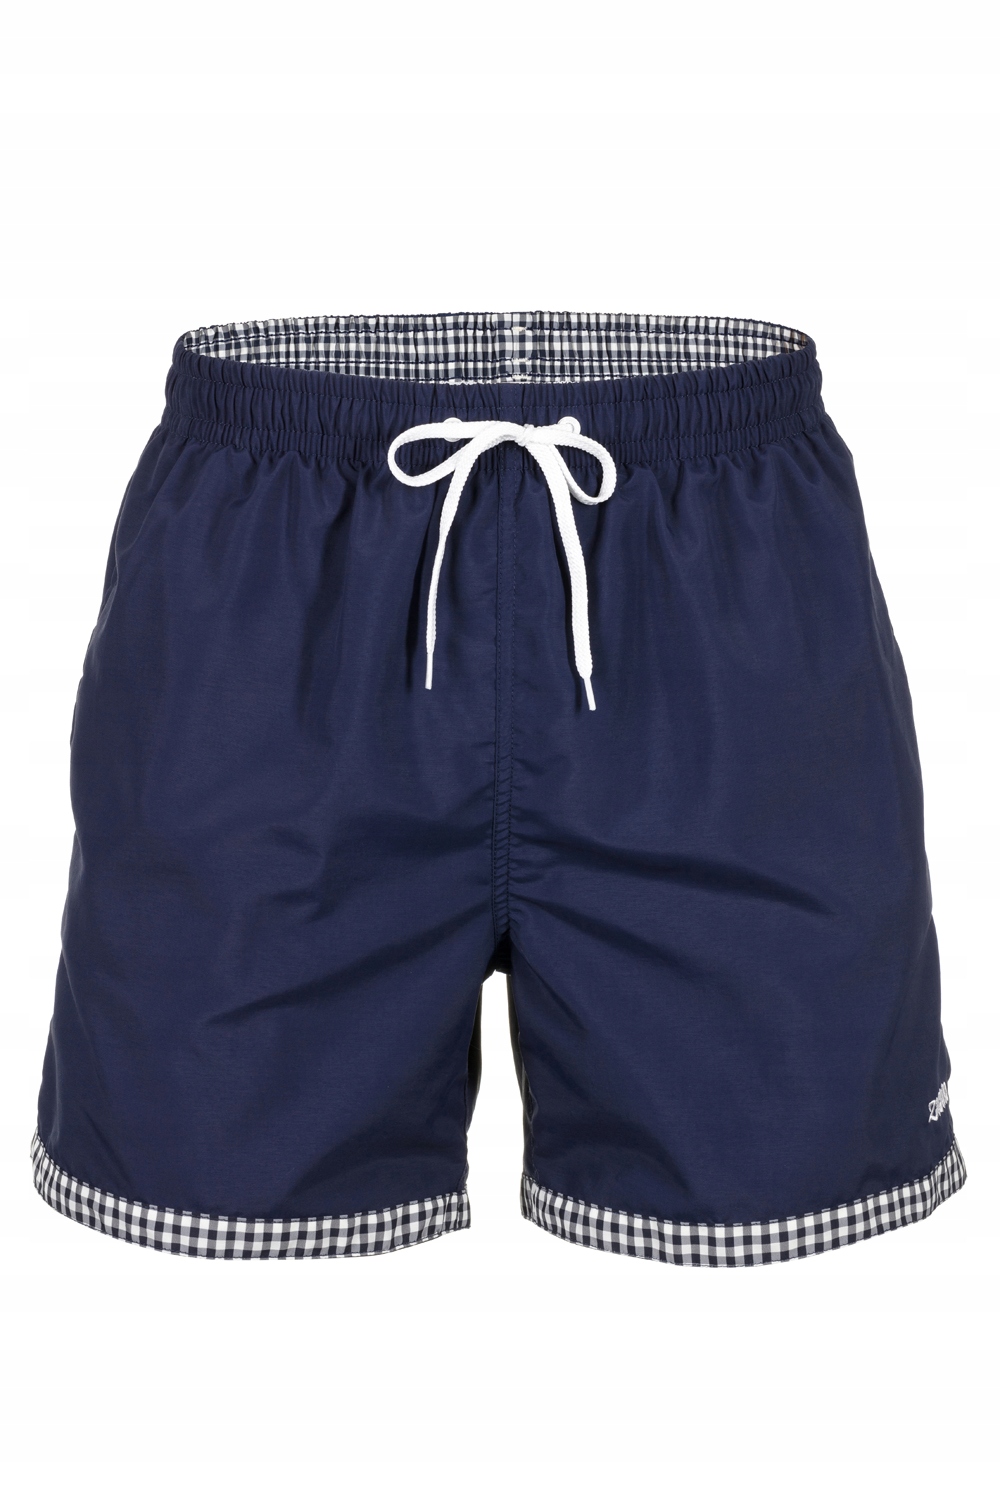 Л шорт. Лшорт. Men shorts Aeropostale Grey Size 38, Swim shorts Columbia Size XL.